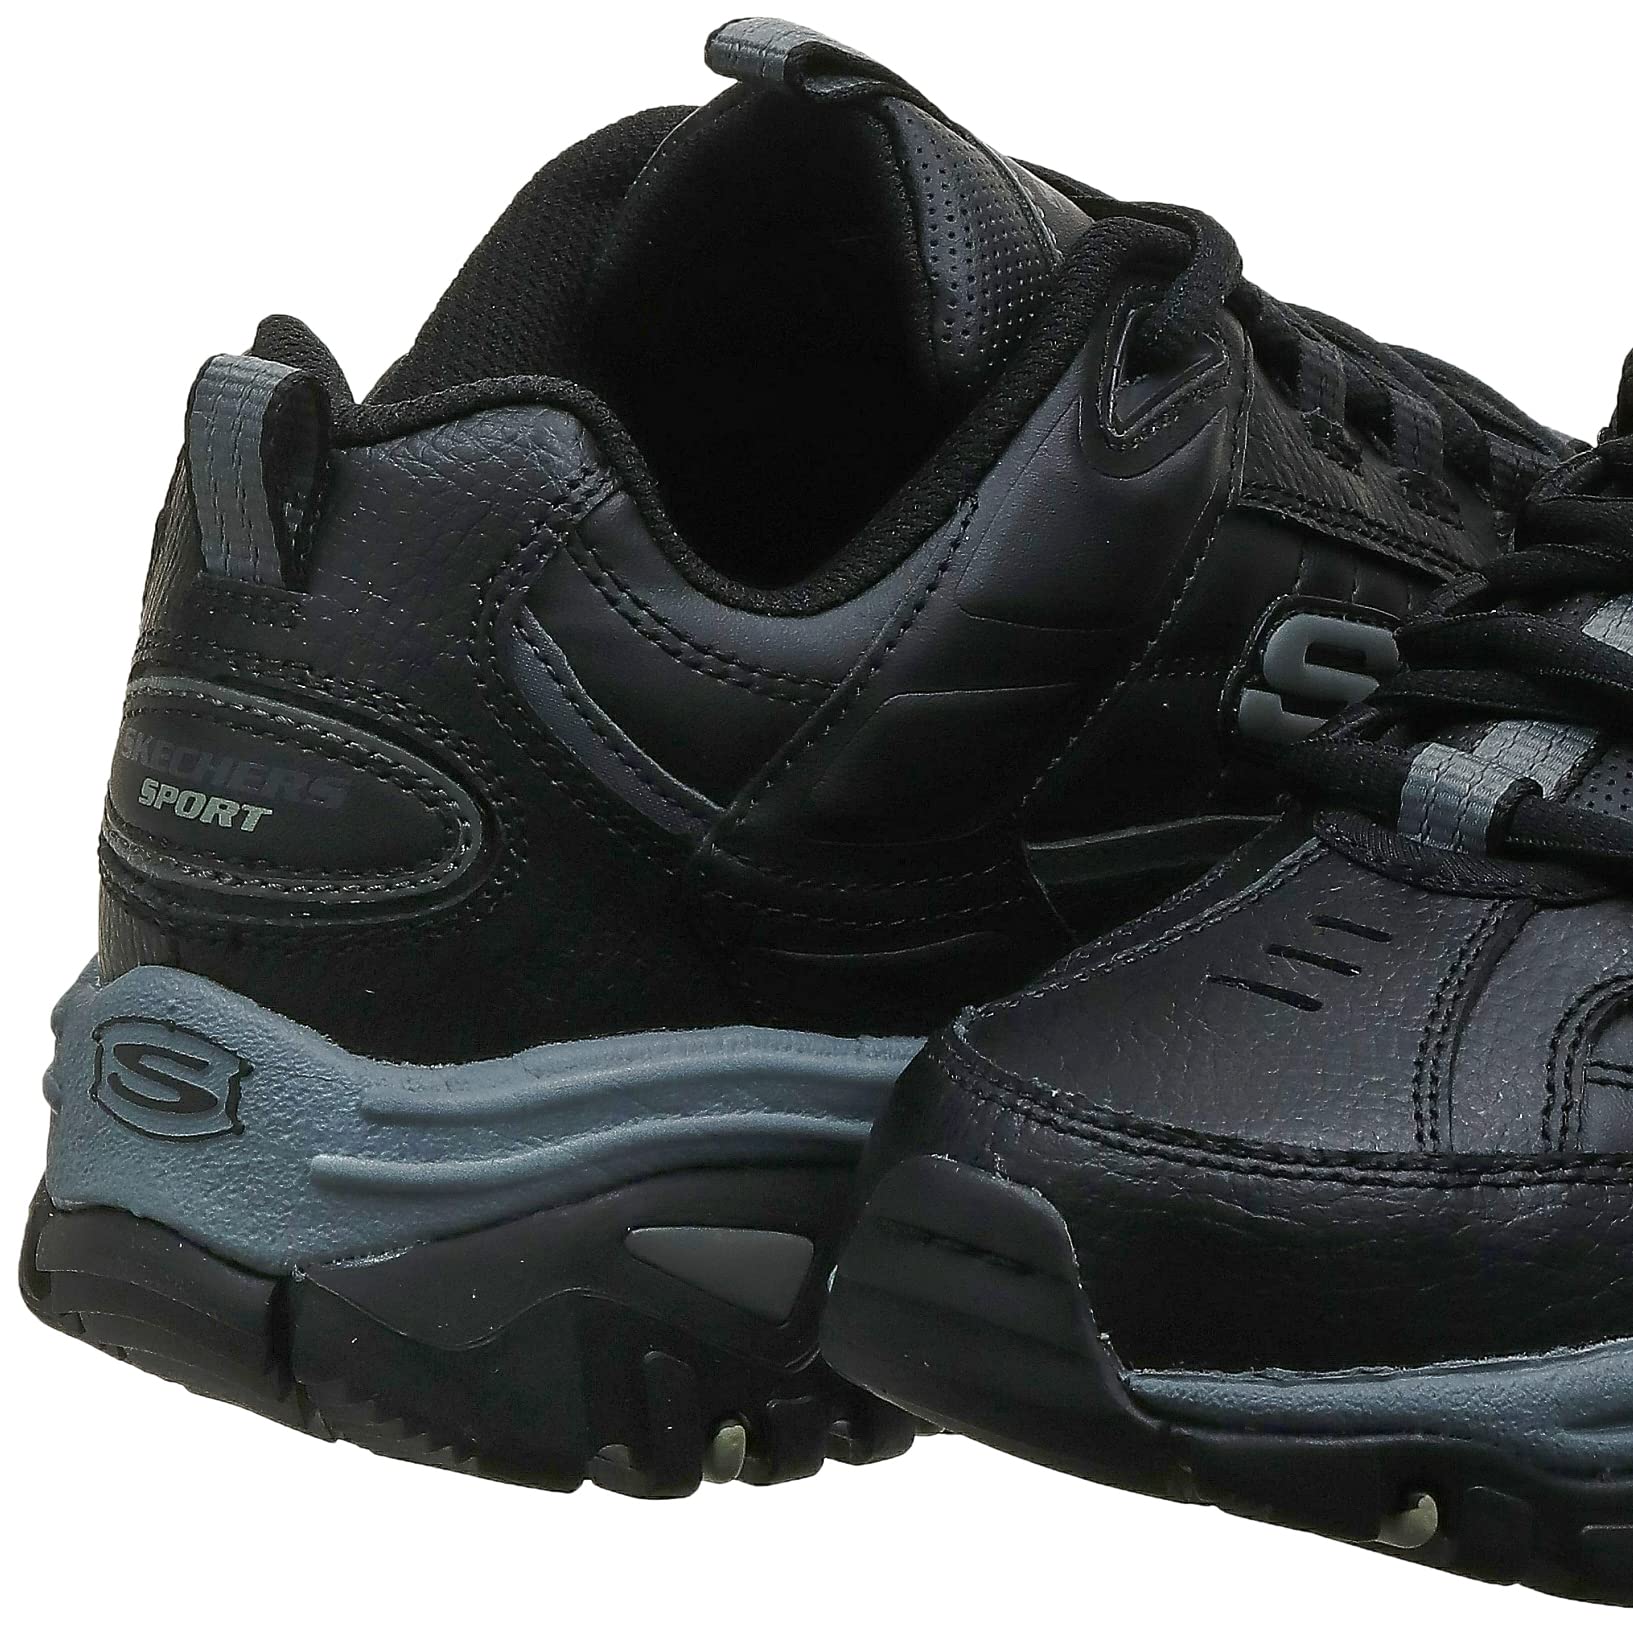 Skechers Men's Energy Afterburn Shoes Lace-Up Sneaker, Black/Black, 10